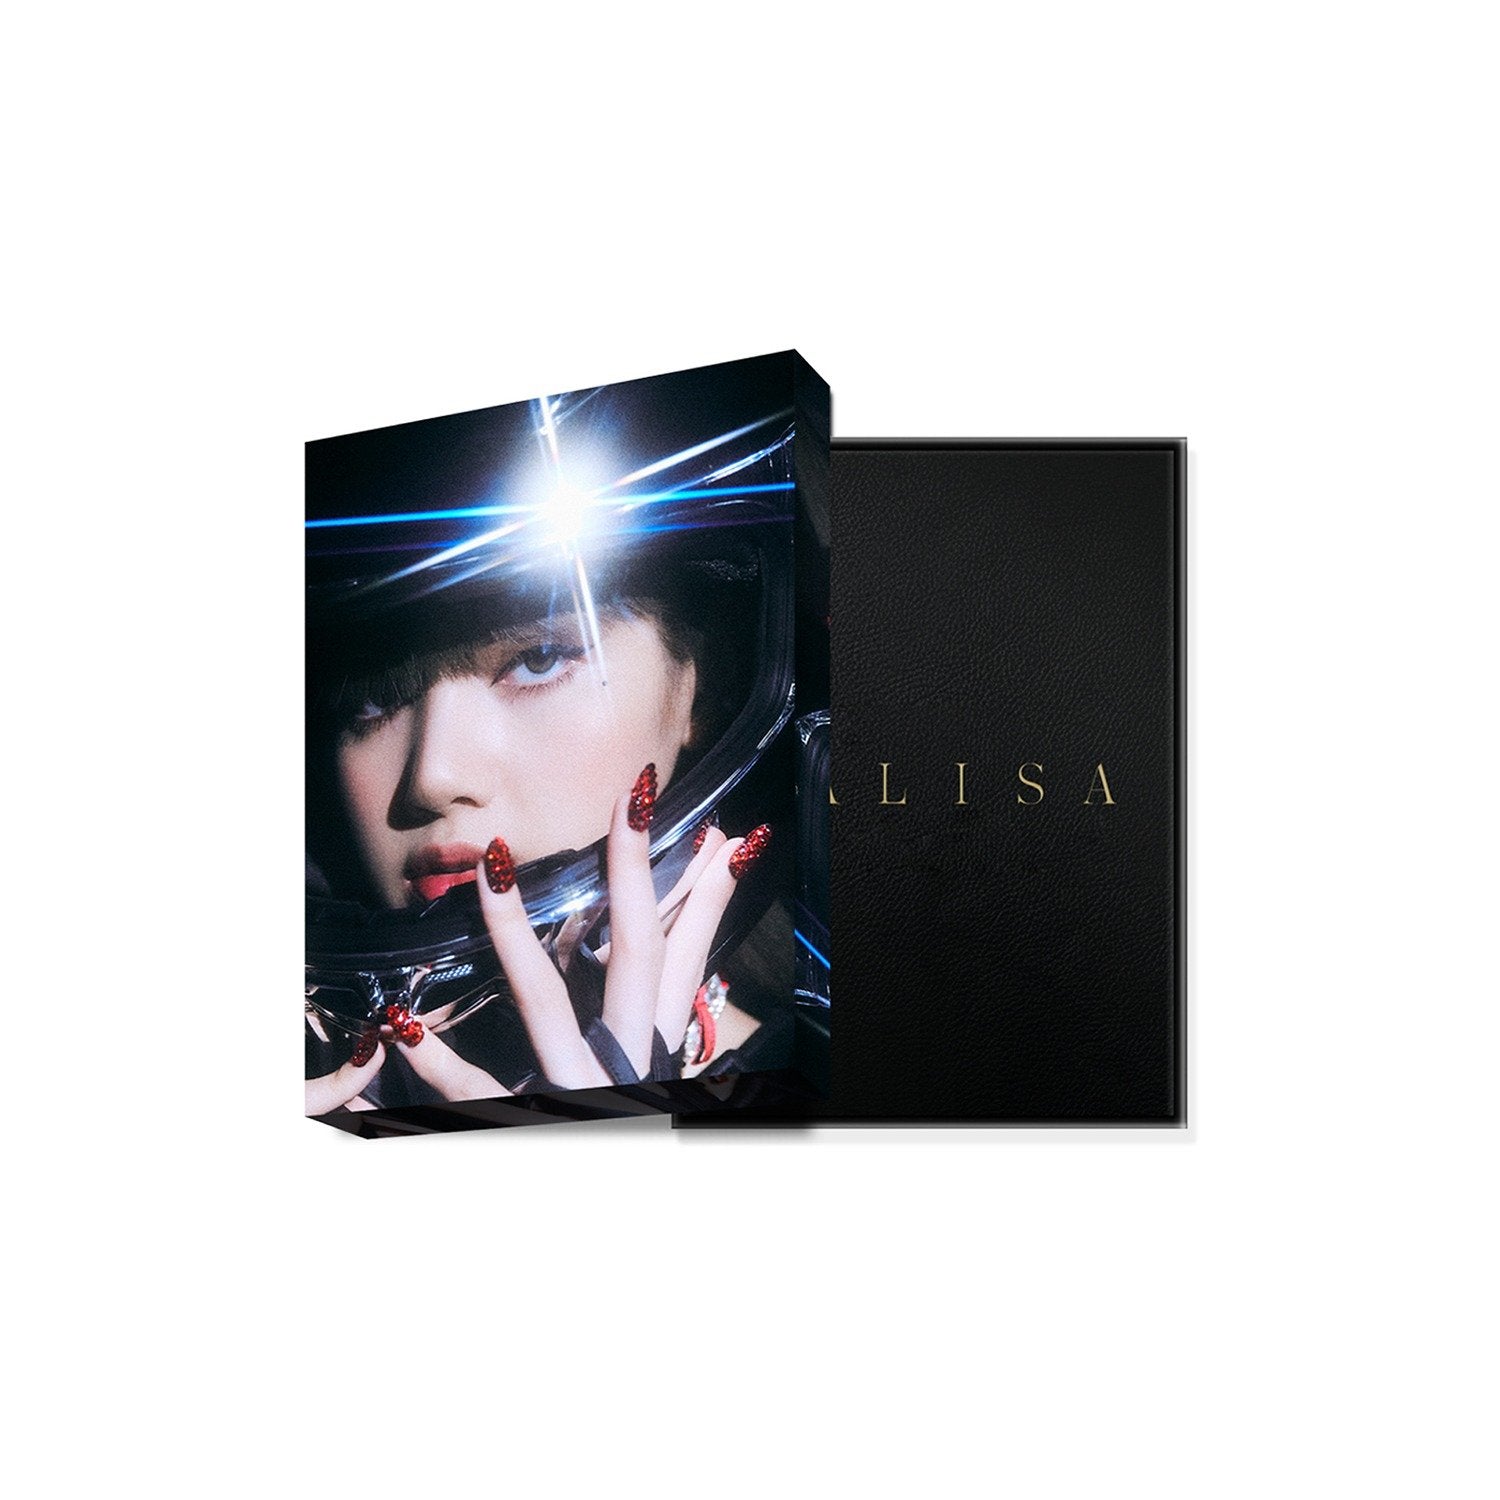 [PR] Apple Music LISA - LALISA PHOTOBOOK SPECIAL EDITION